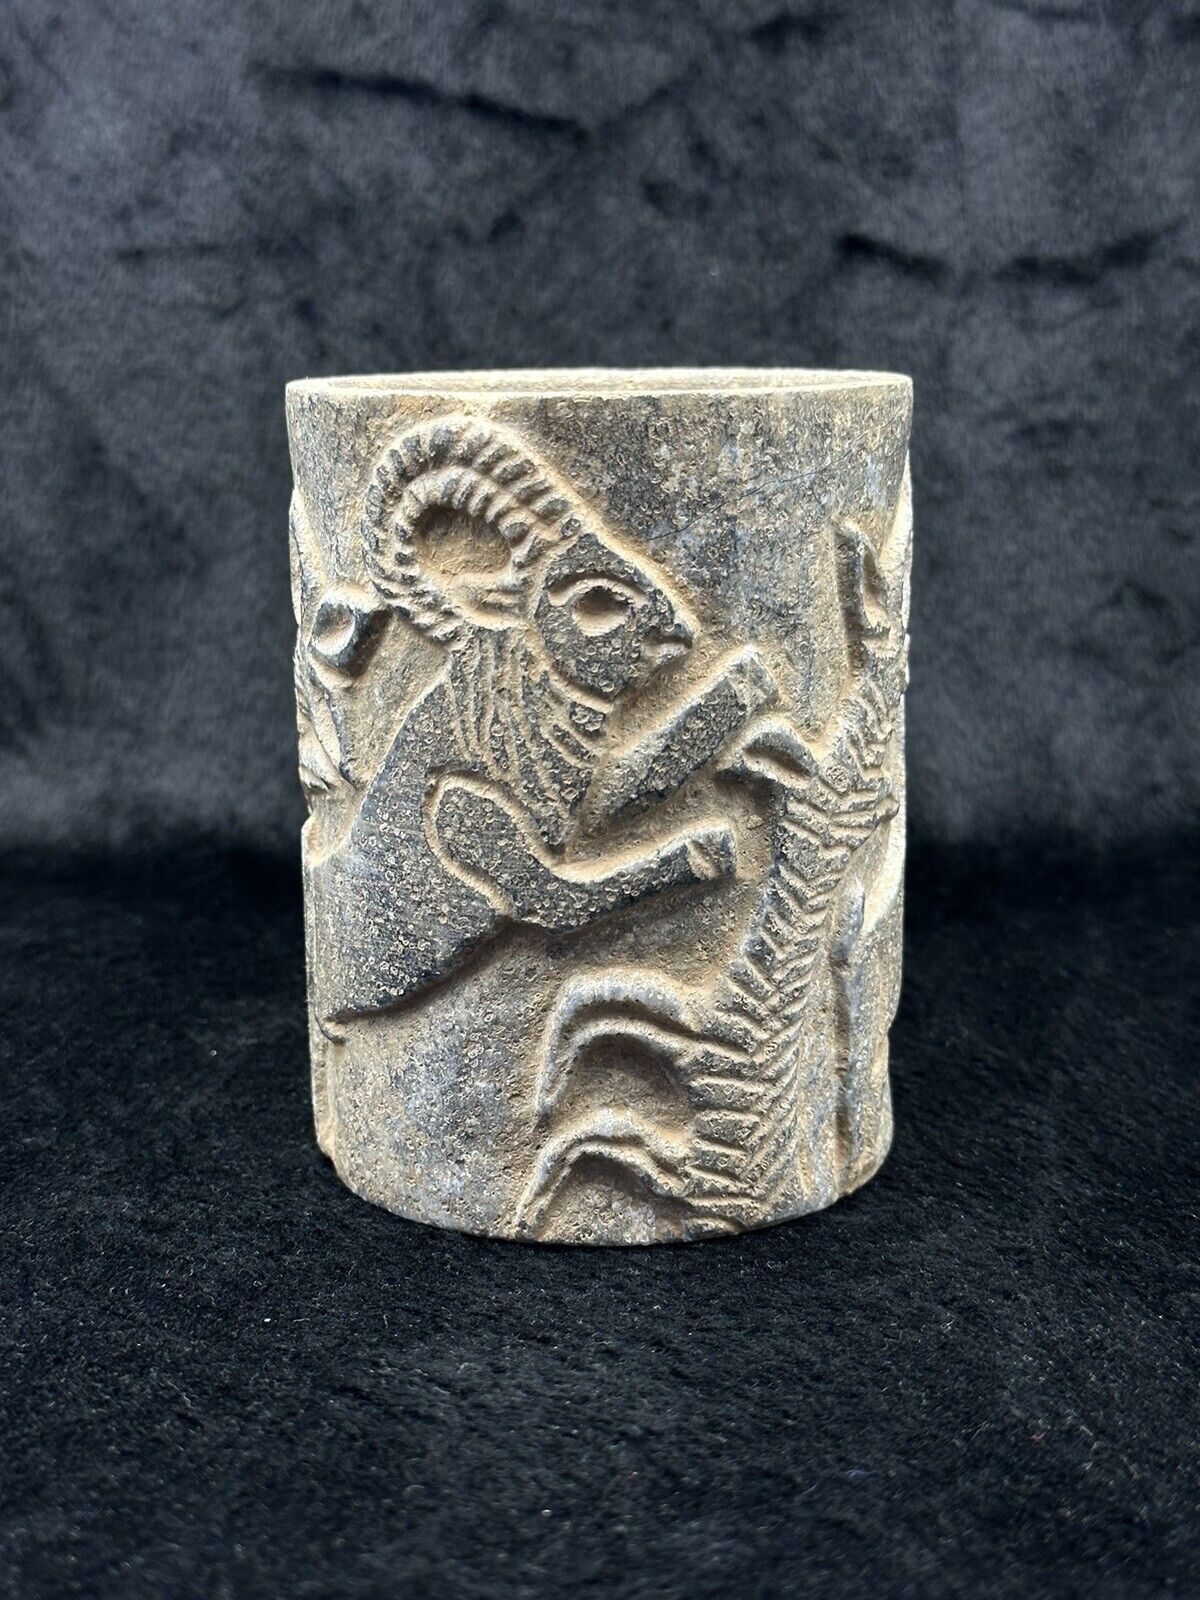 Rare Near Eastern Jiroft Civilization Chlorite Stone Vase With Animal Decorated